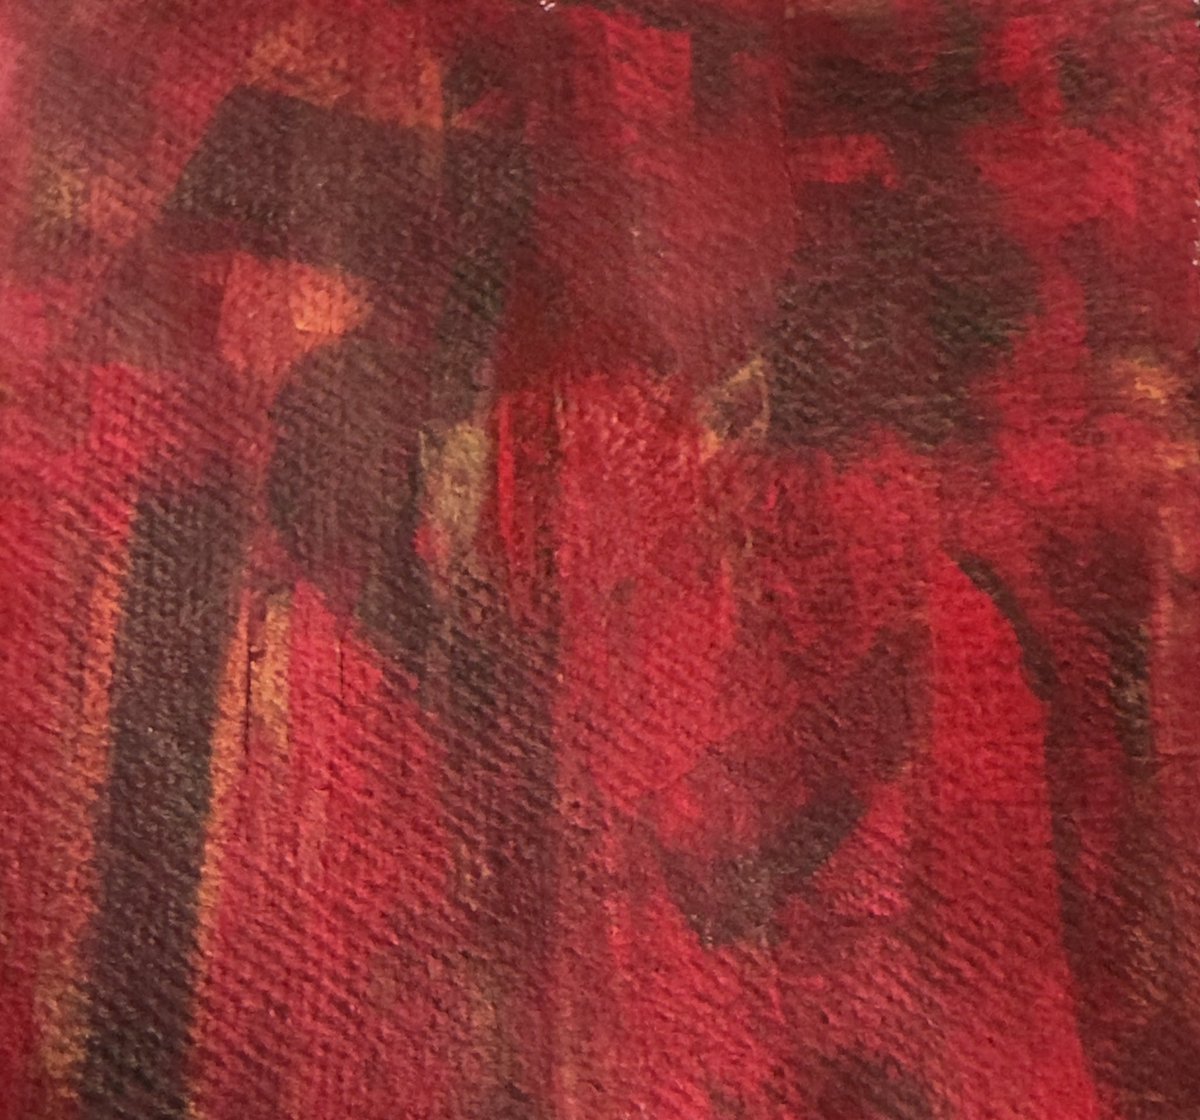 ‘Flow’
Acrylic on cotton rag
5.14” x 6.5”

#art #painting #abstractpainting #abstractexpressionism #abstractartist #abstractartwork #artist #painter #artwork #artoftheday #modernart #contemporaryart #acrylicpainting #acrylicart #cottonrag #contemporaryabstractpainting